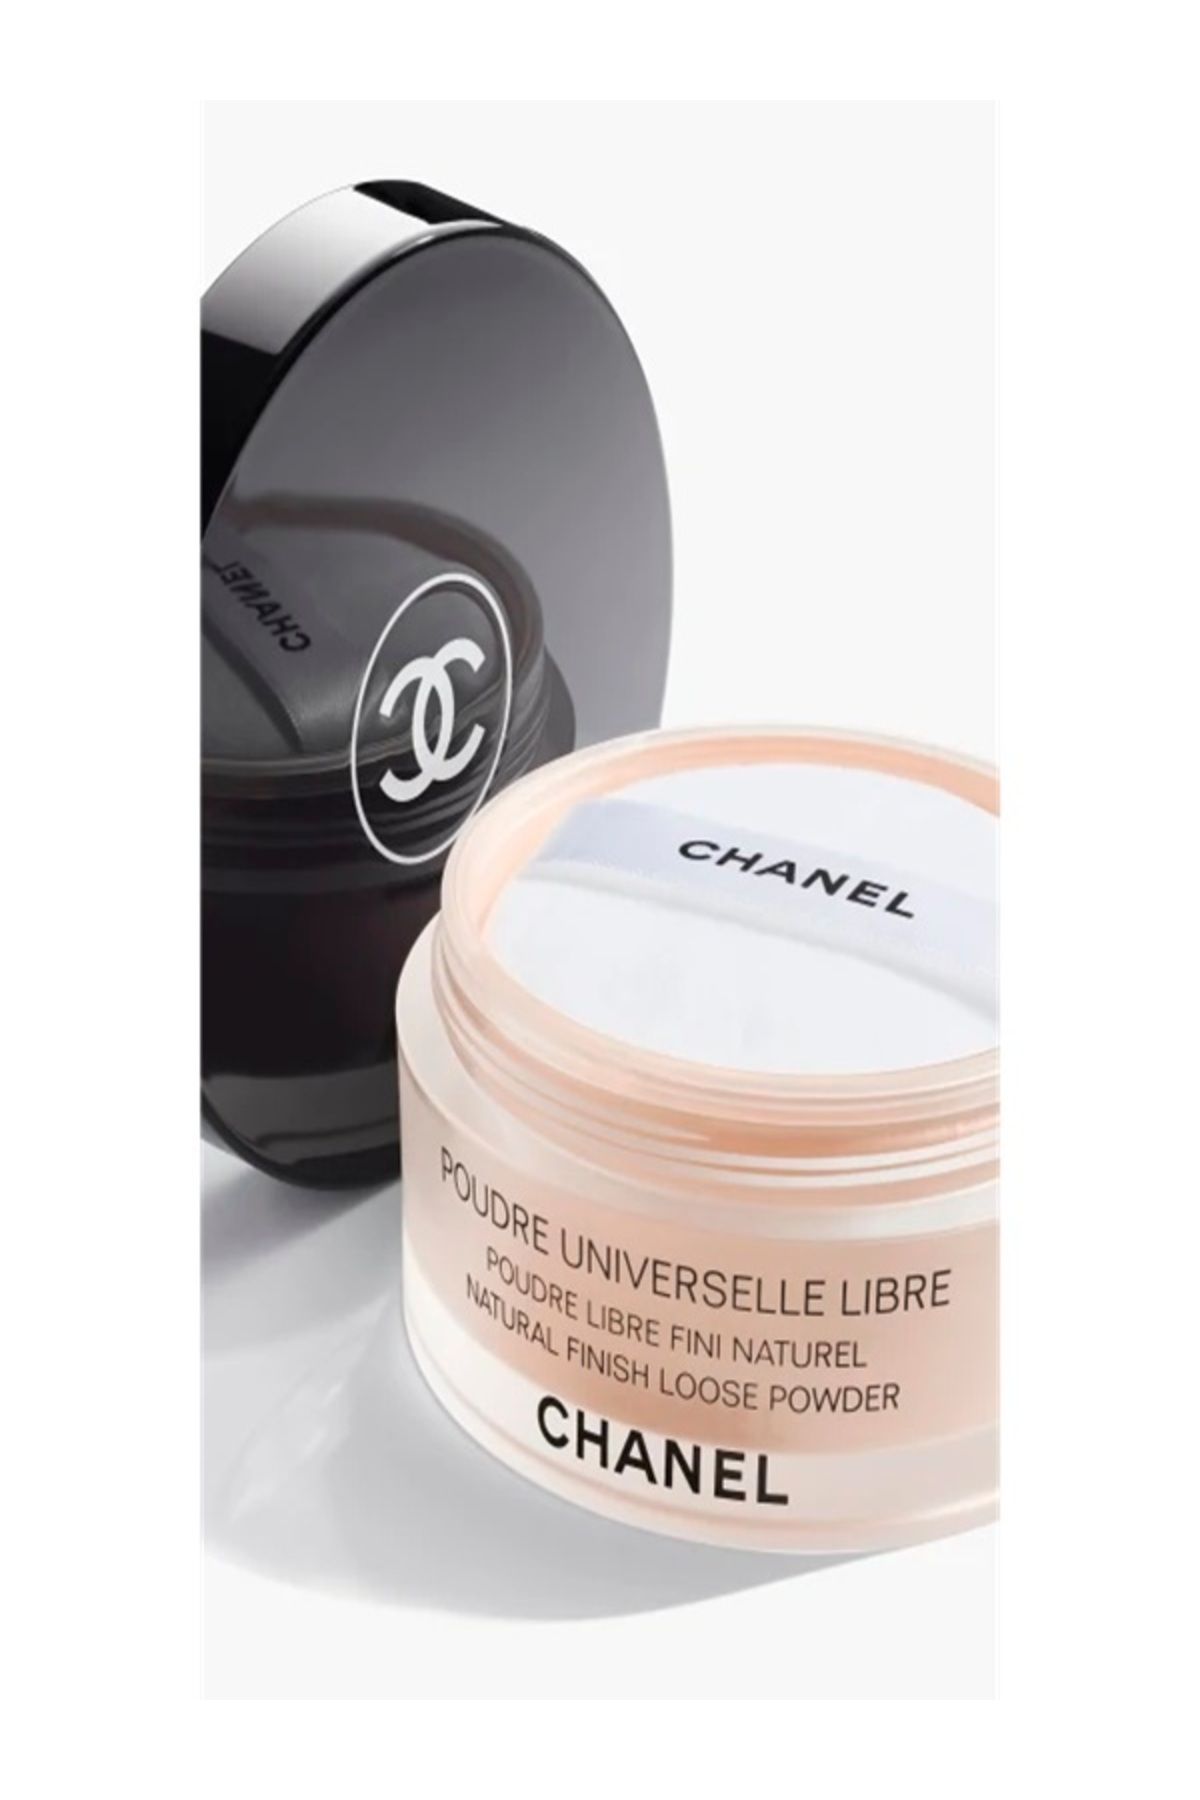 Chanel پودر فیکس کننده آرایش UNIVERSELLE LIBRE مات کننده و ضد براقیت رنگ هلویی